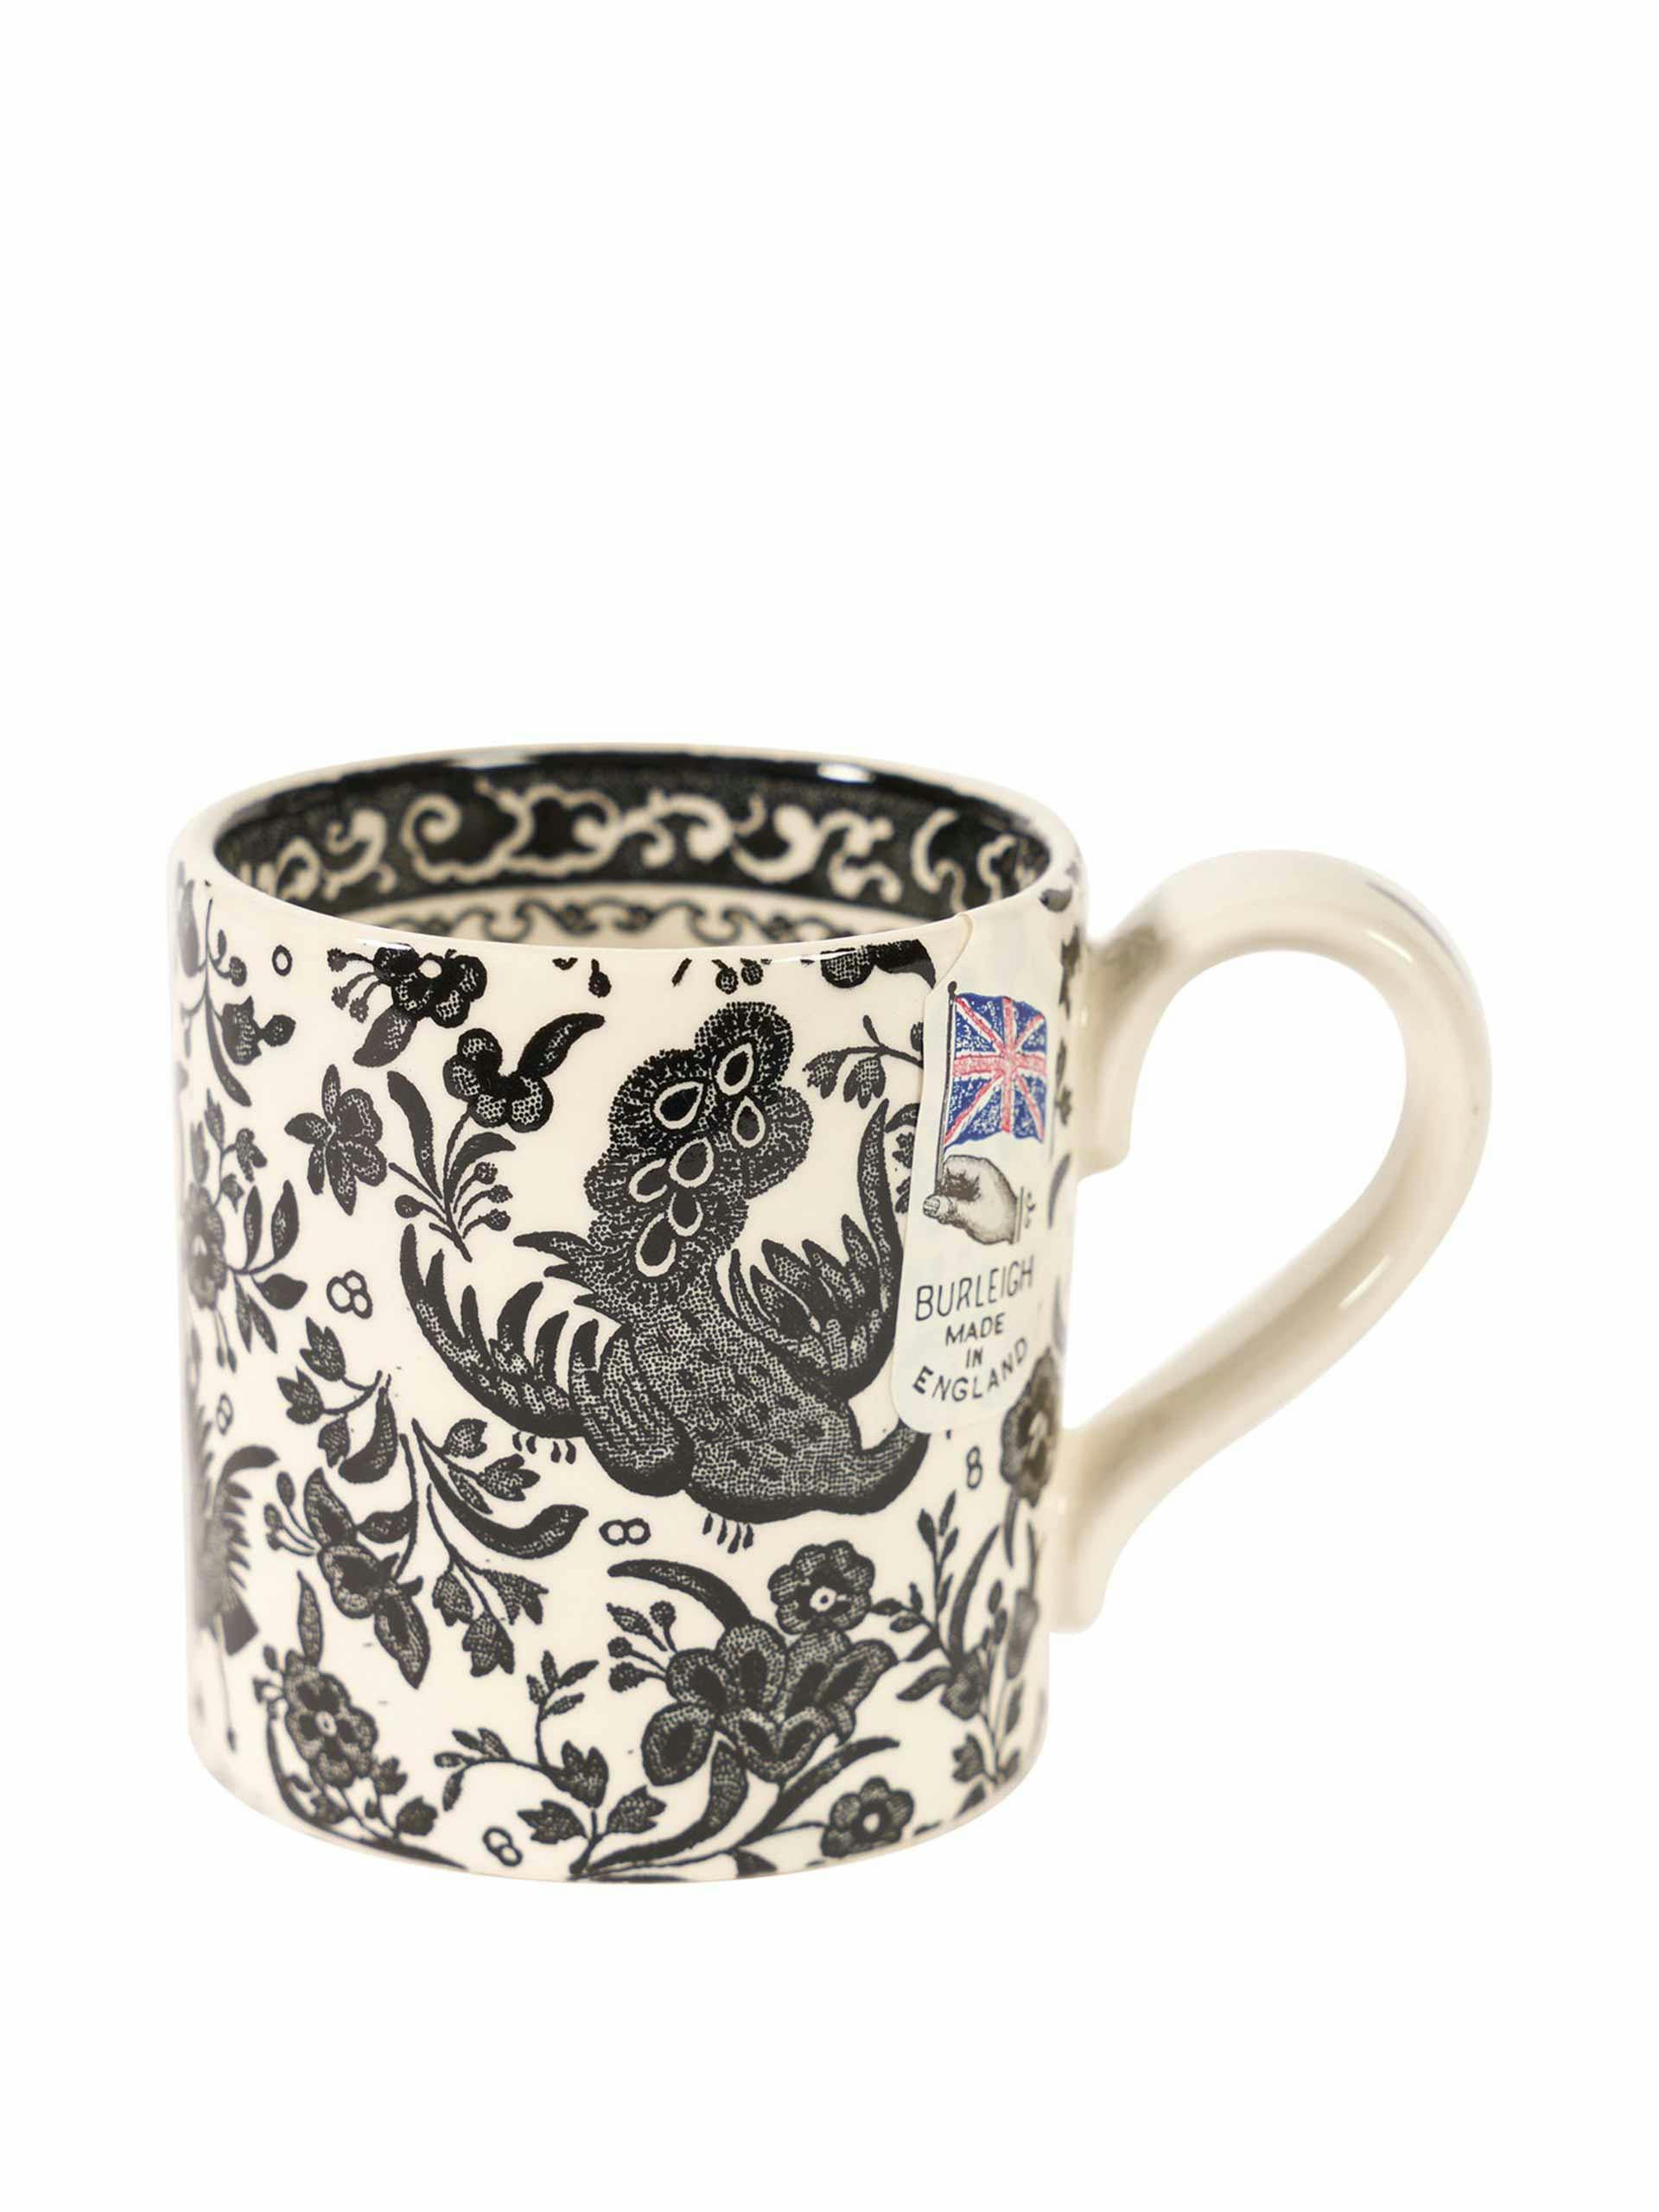 Burleigh regal black peacock half pint mug